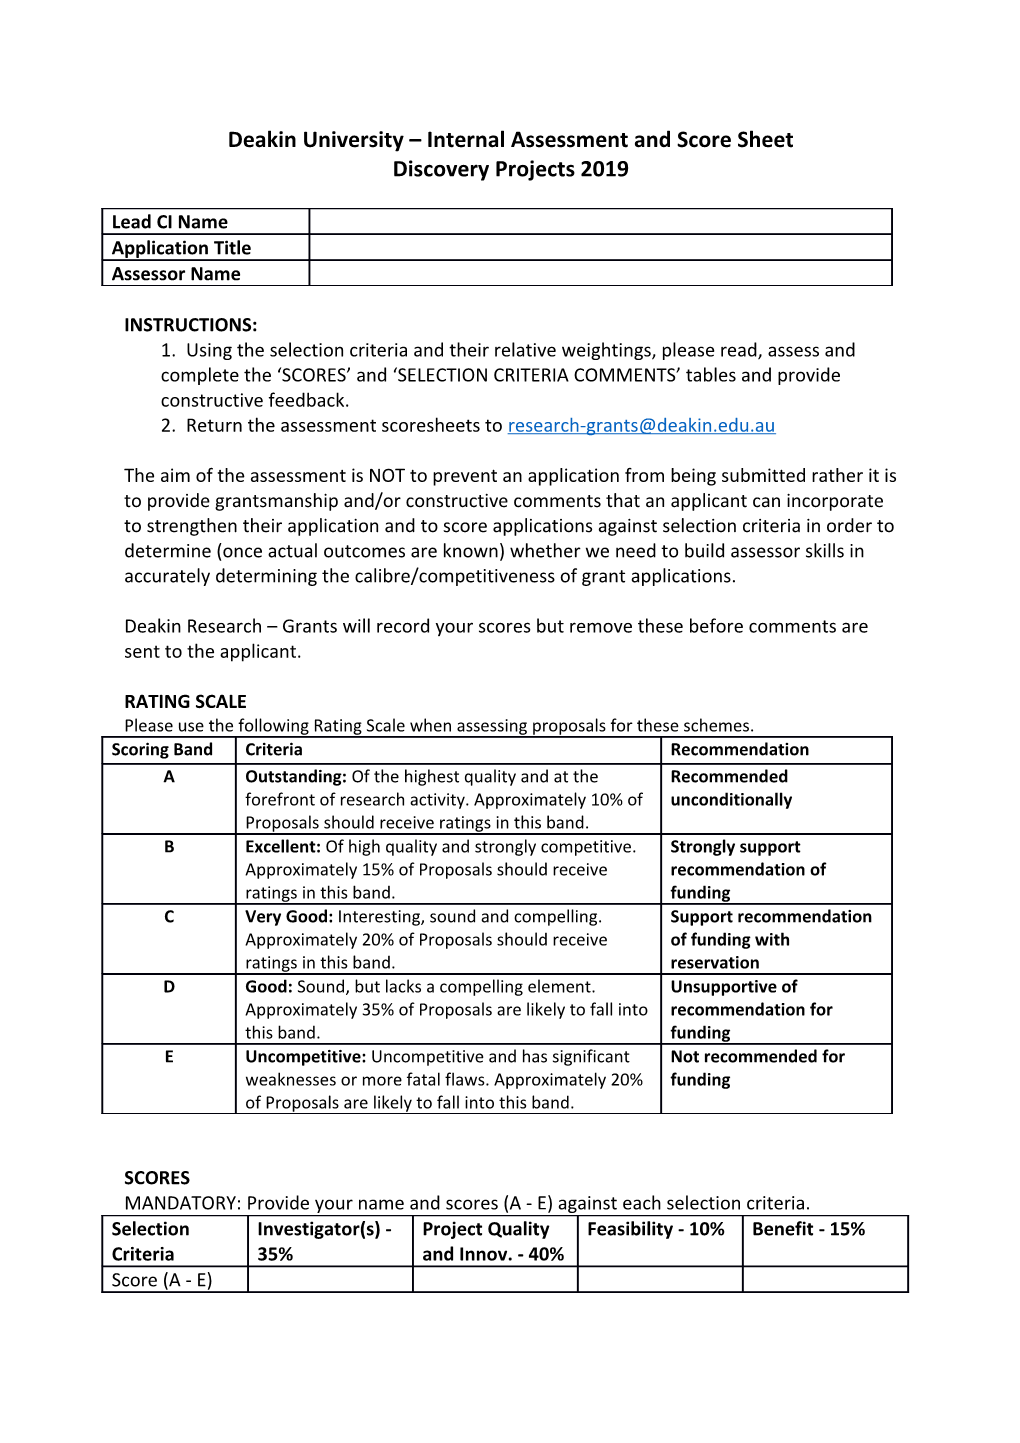 Deakin University Internal Assessment and Score Sheet